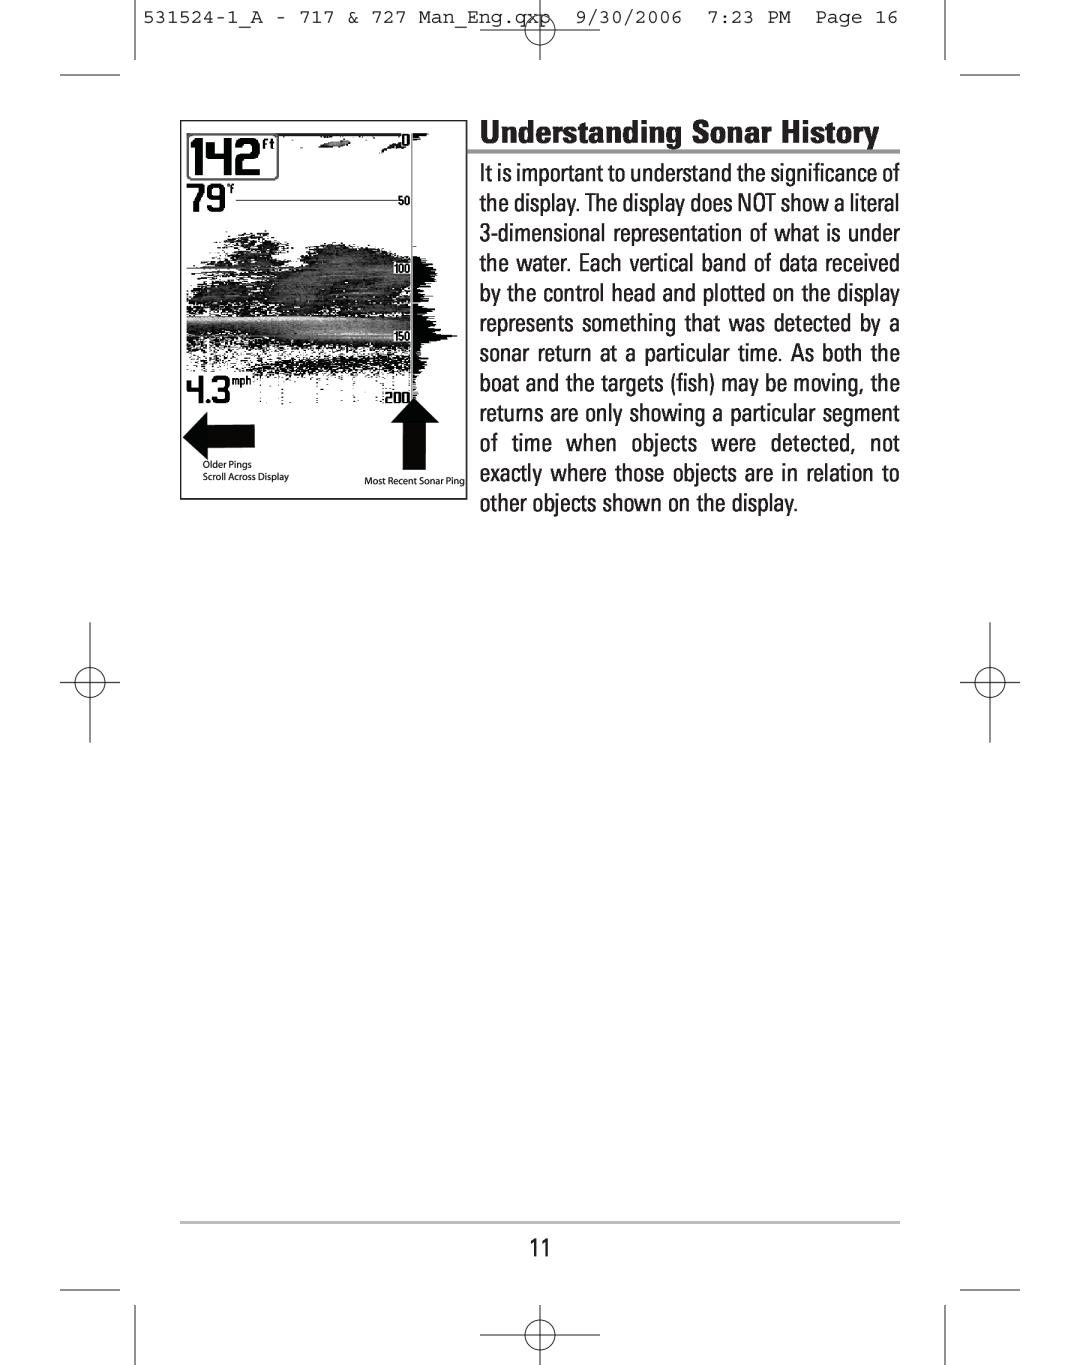 Humminbird manual Understanding Sonar History, 531524-1A - 717 & 727 ManEng.qxp 9/30/2006 723 PM Page 